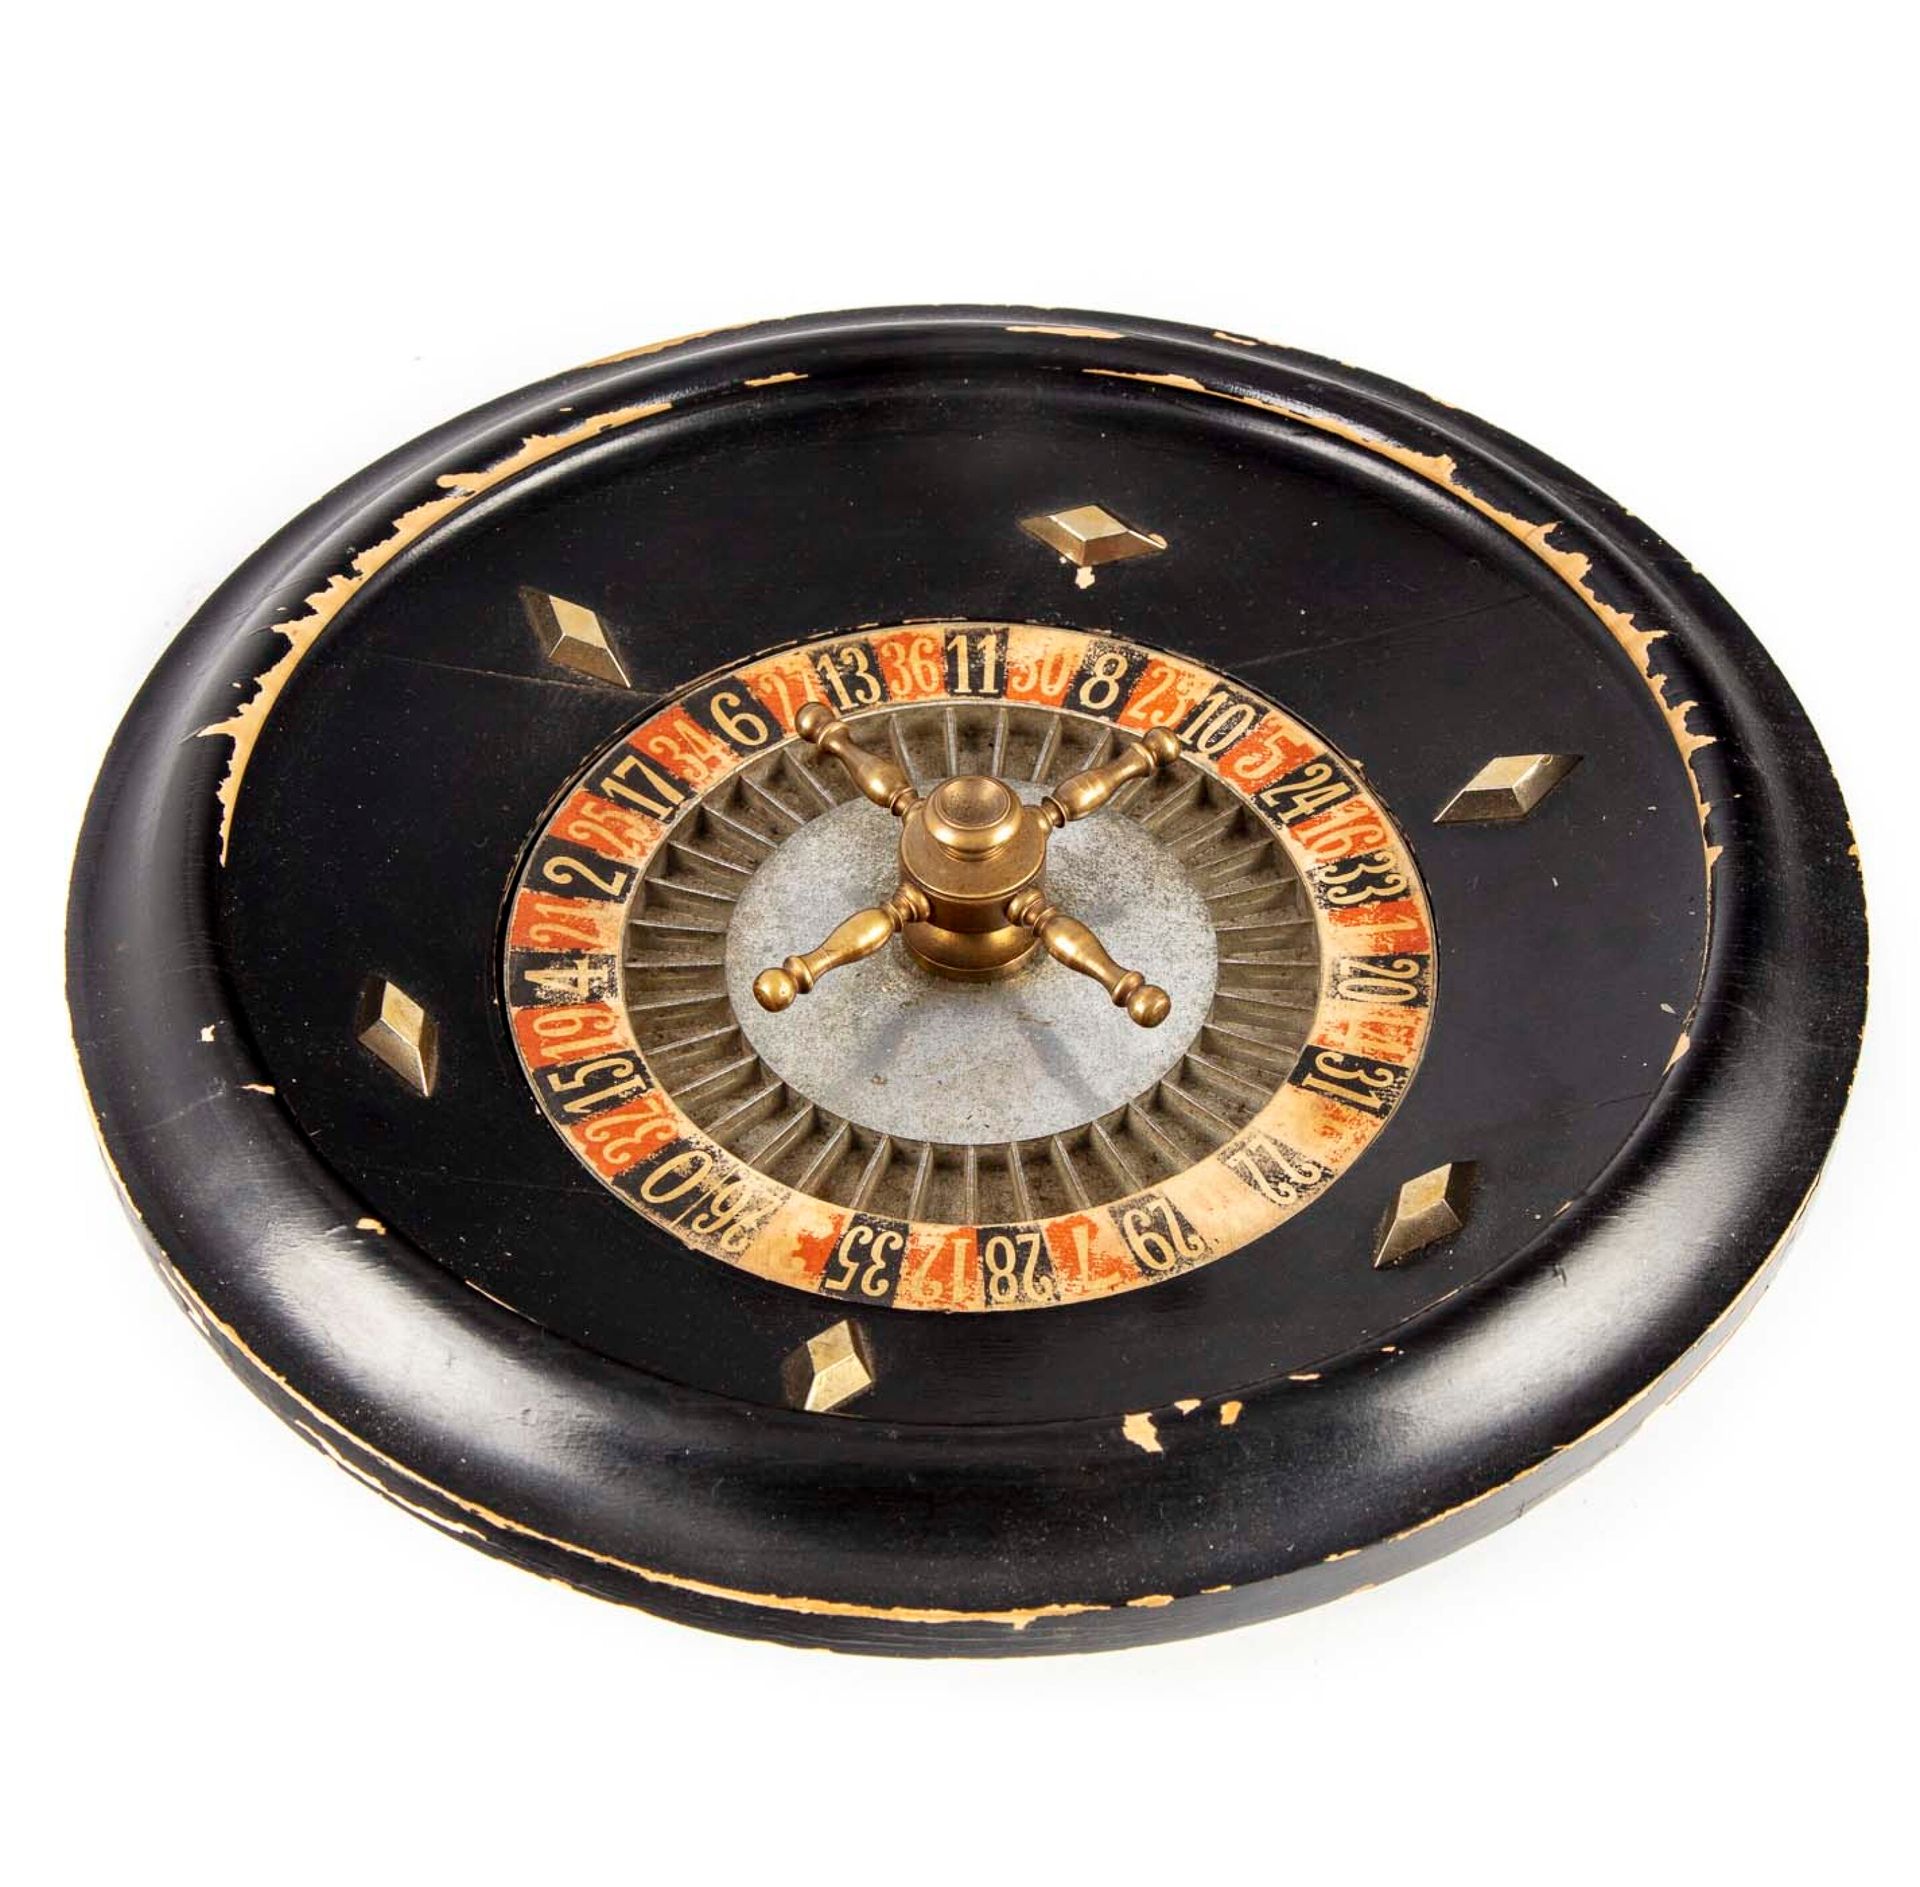 Null Pequeña ruleta de casino de madera ennegrecida

D. 30 cm; H. 7 cm 

Desgast&hellip;